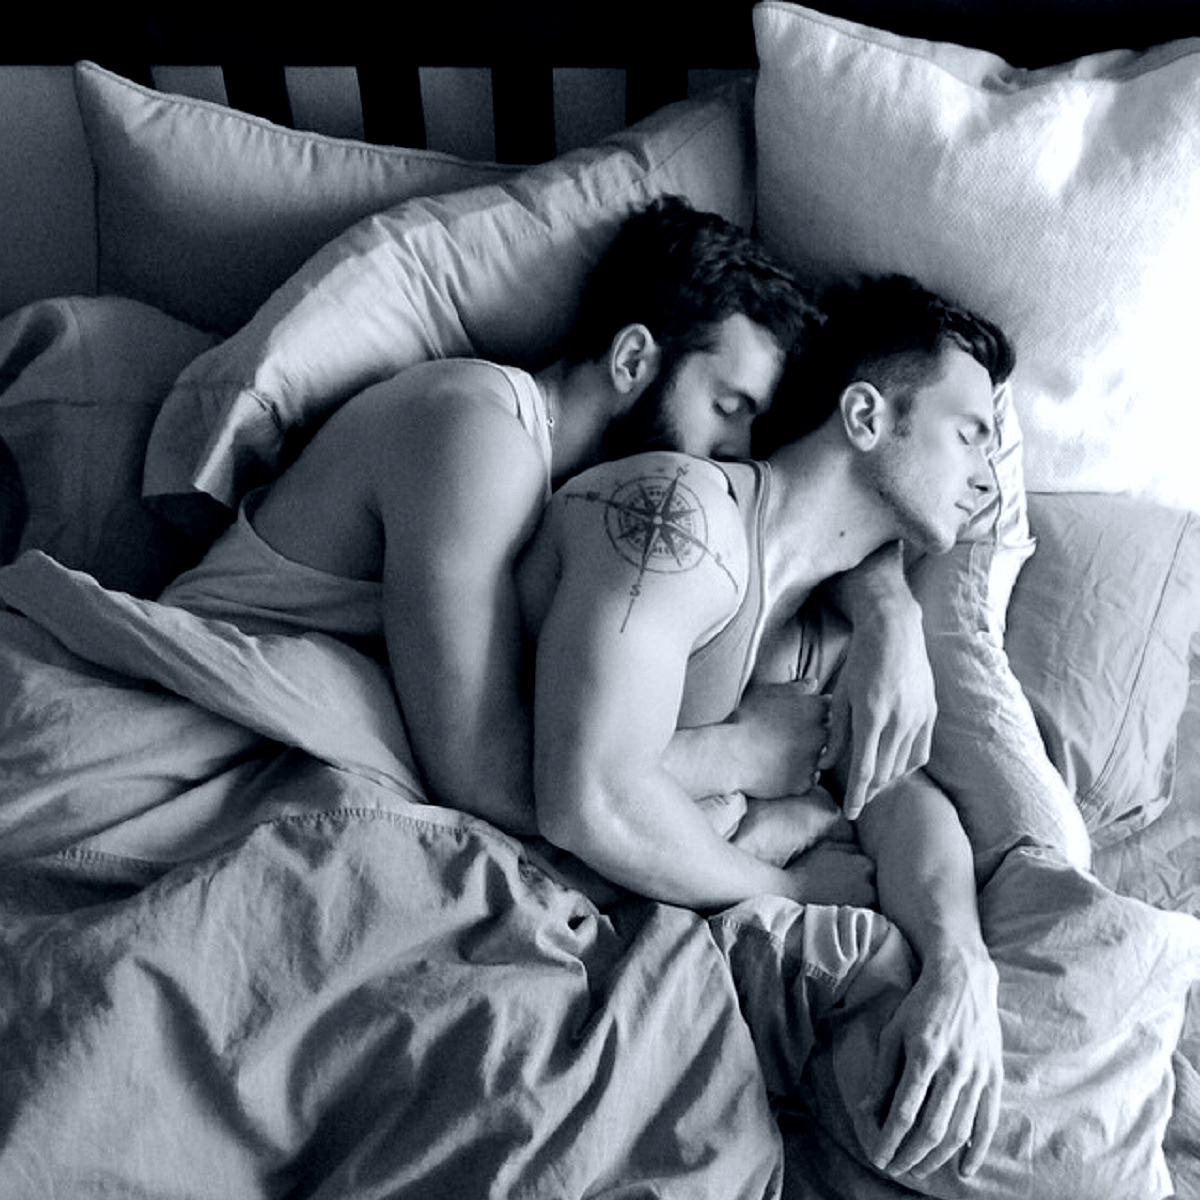 Threesome in bed sleep 2 men gif